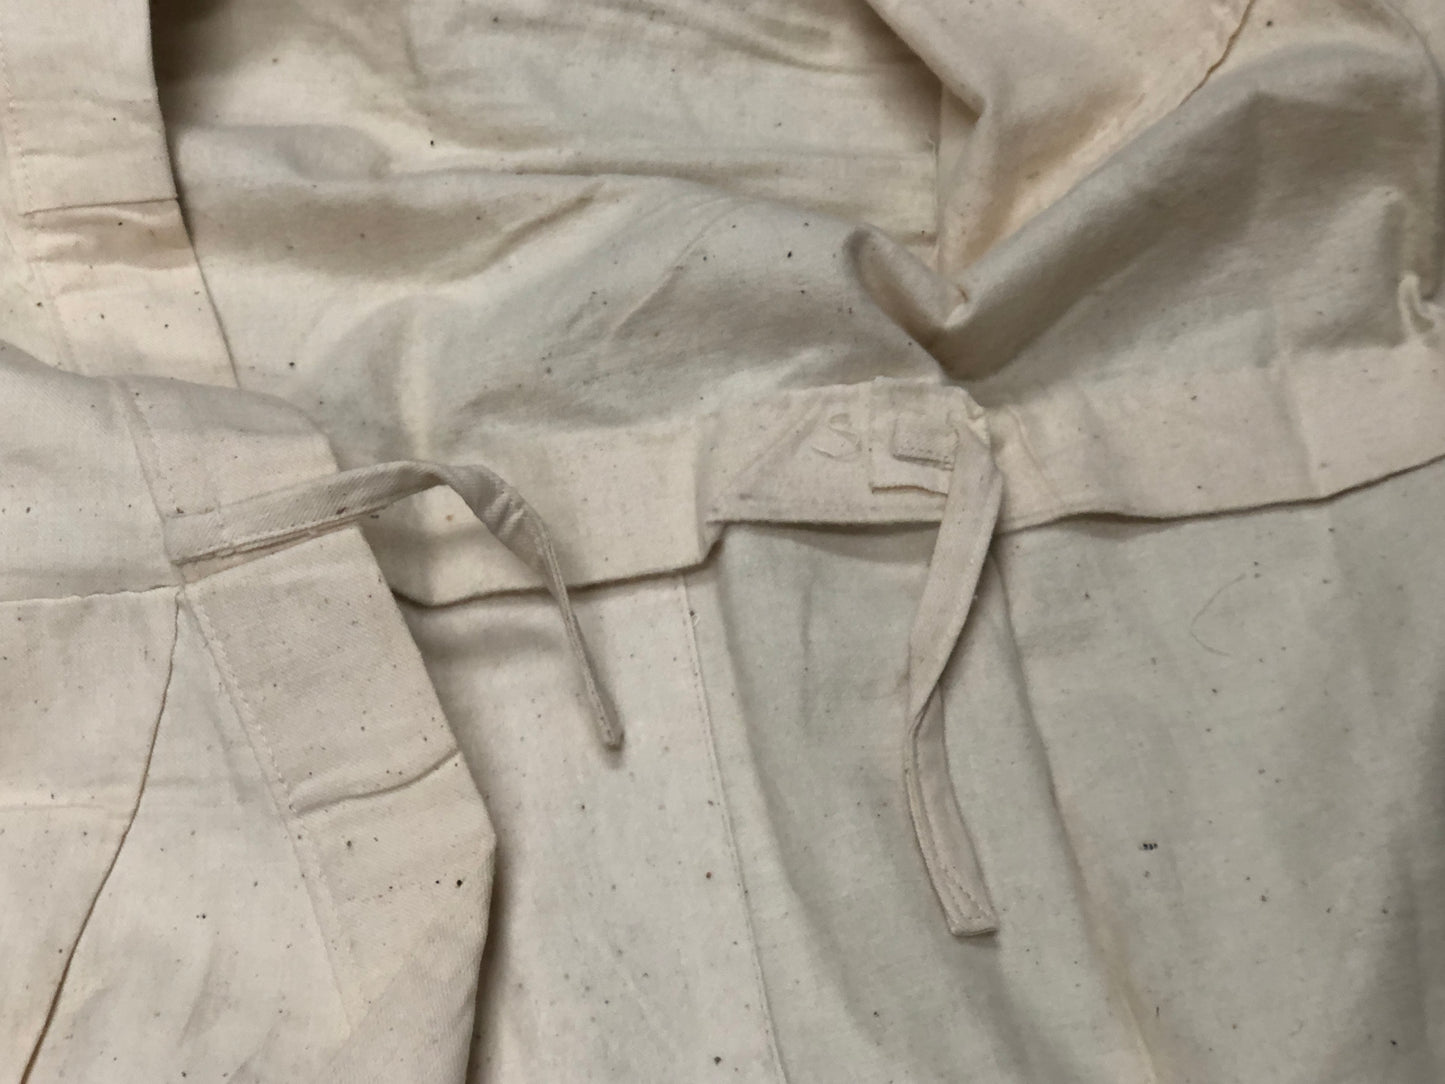 Y4062 Imperial Japan Army White coat robe mark military Japanese WW2 vintage